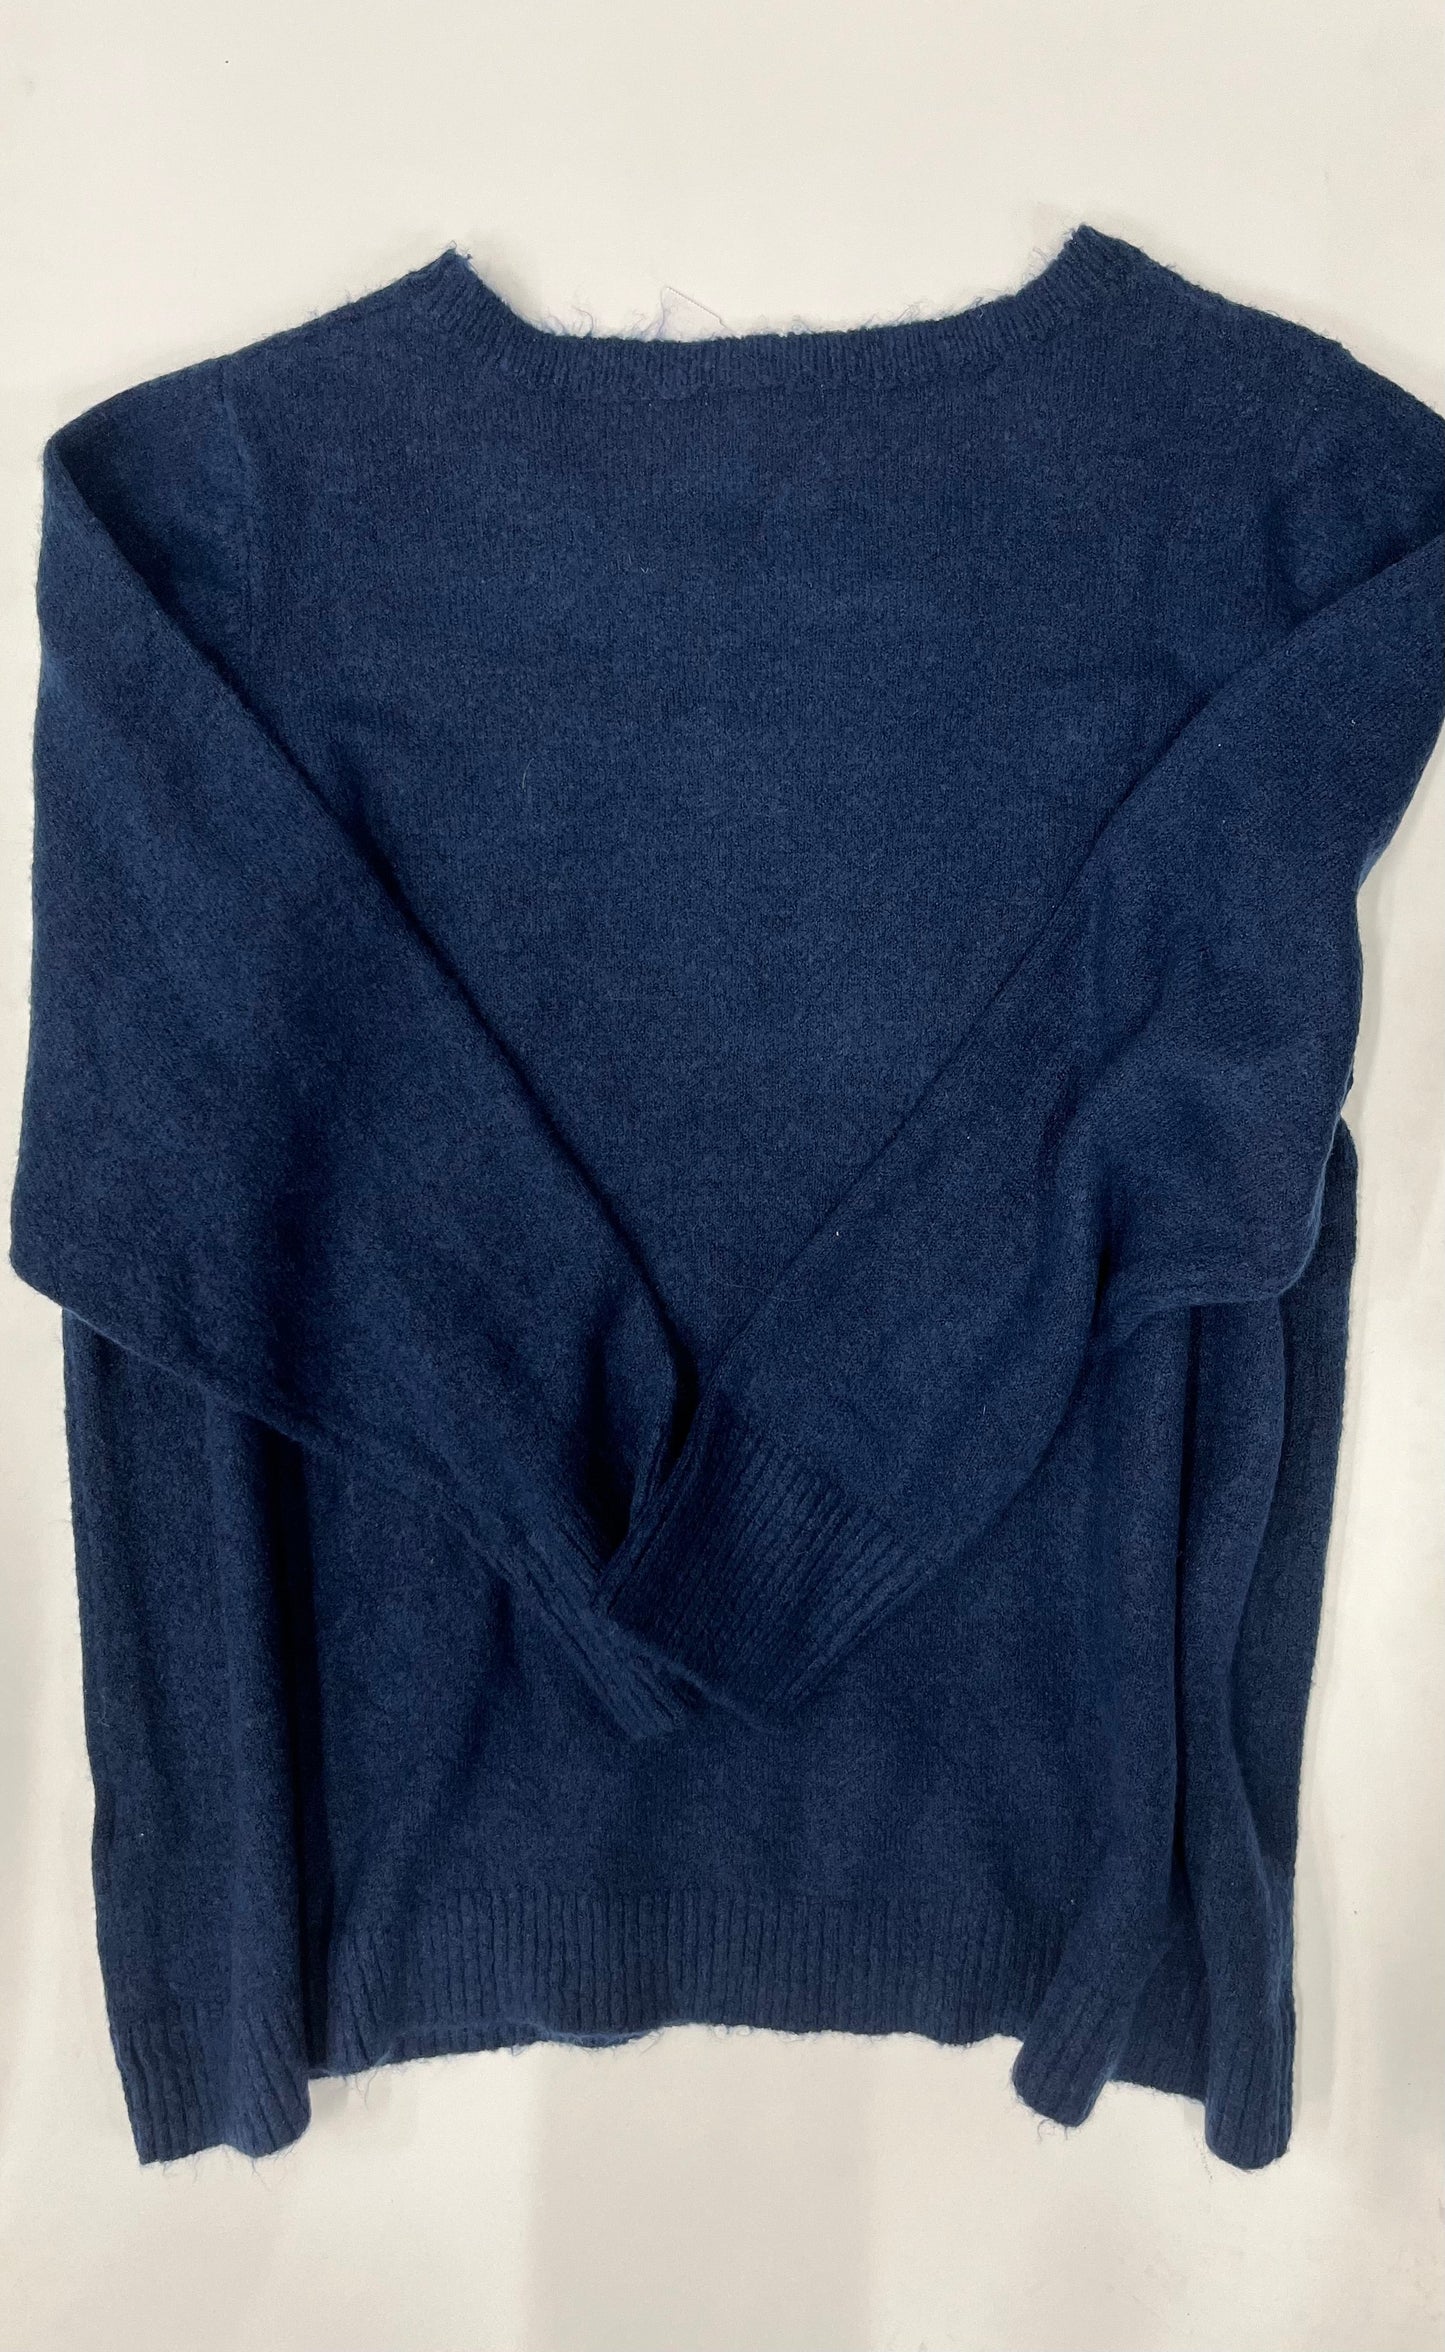 Sweater By Retrology NWT Size: 3x